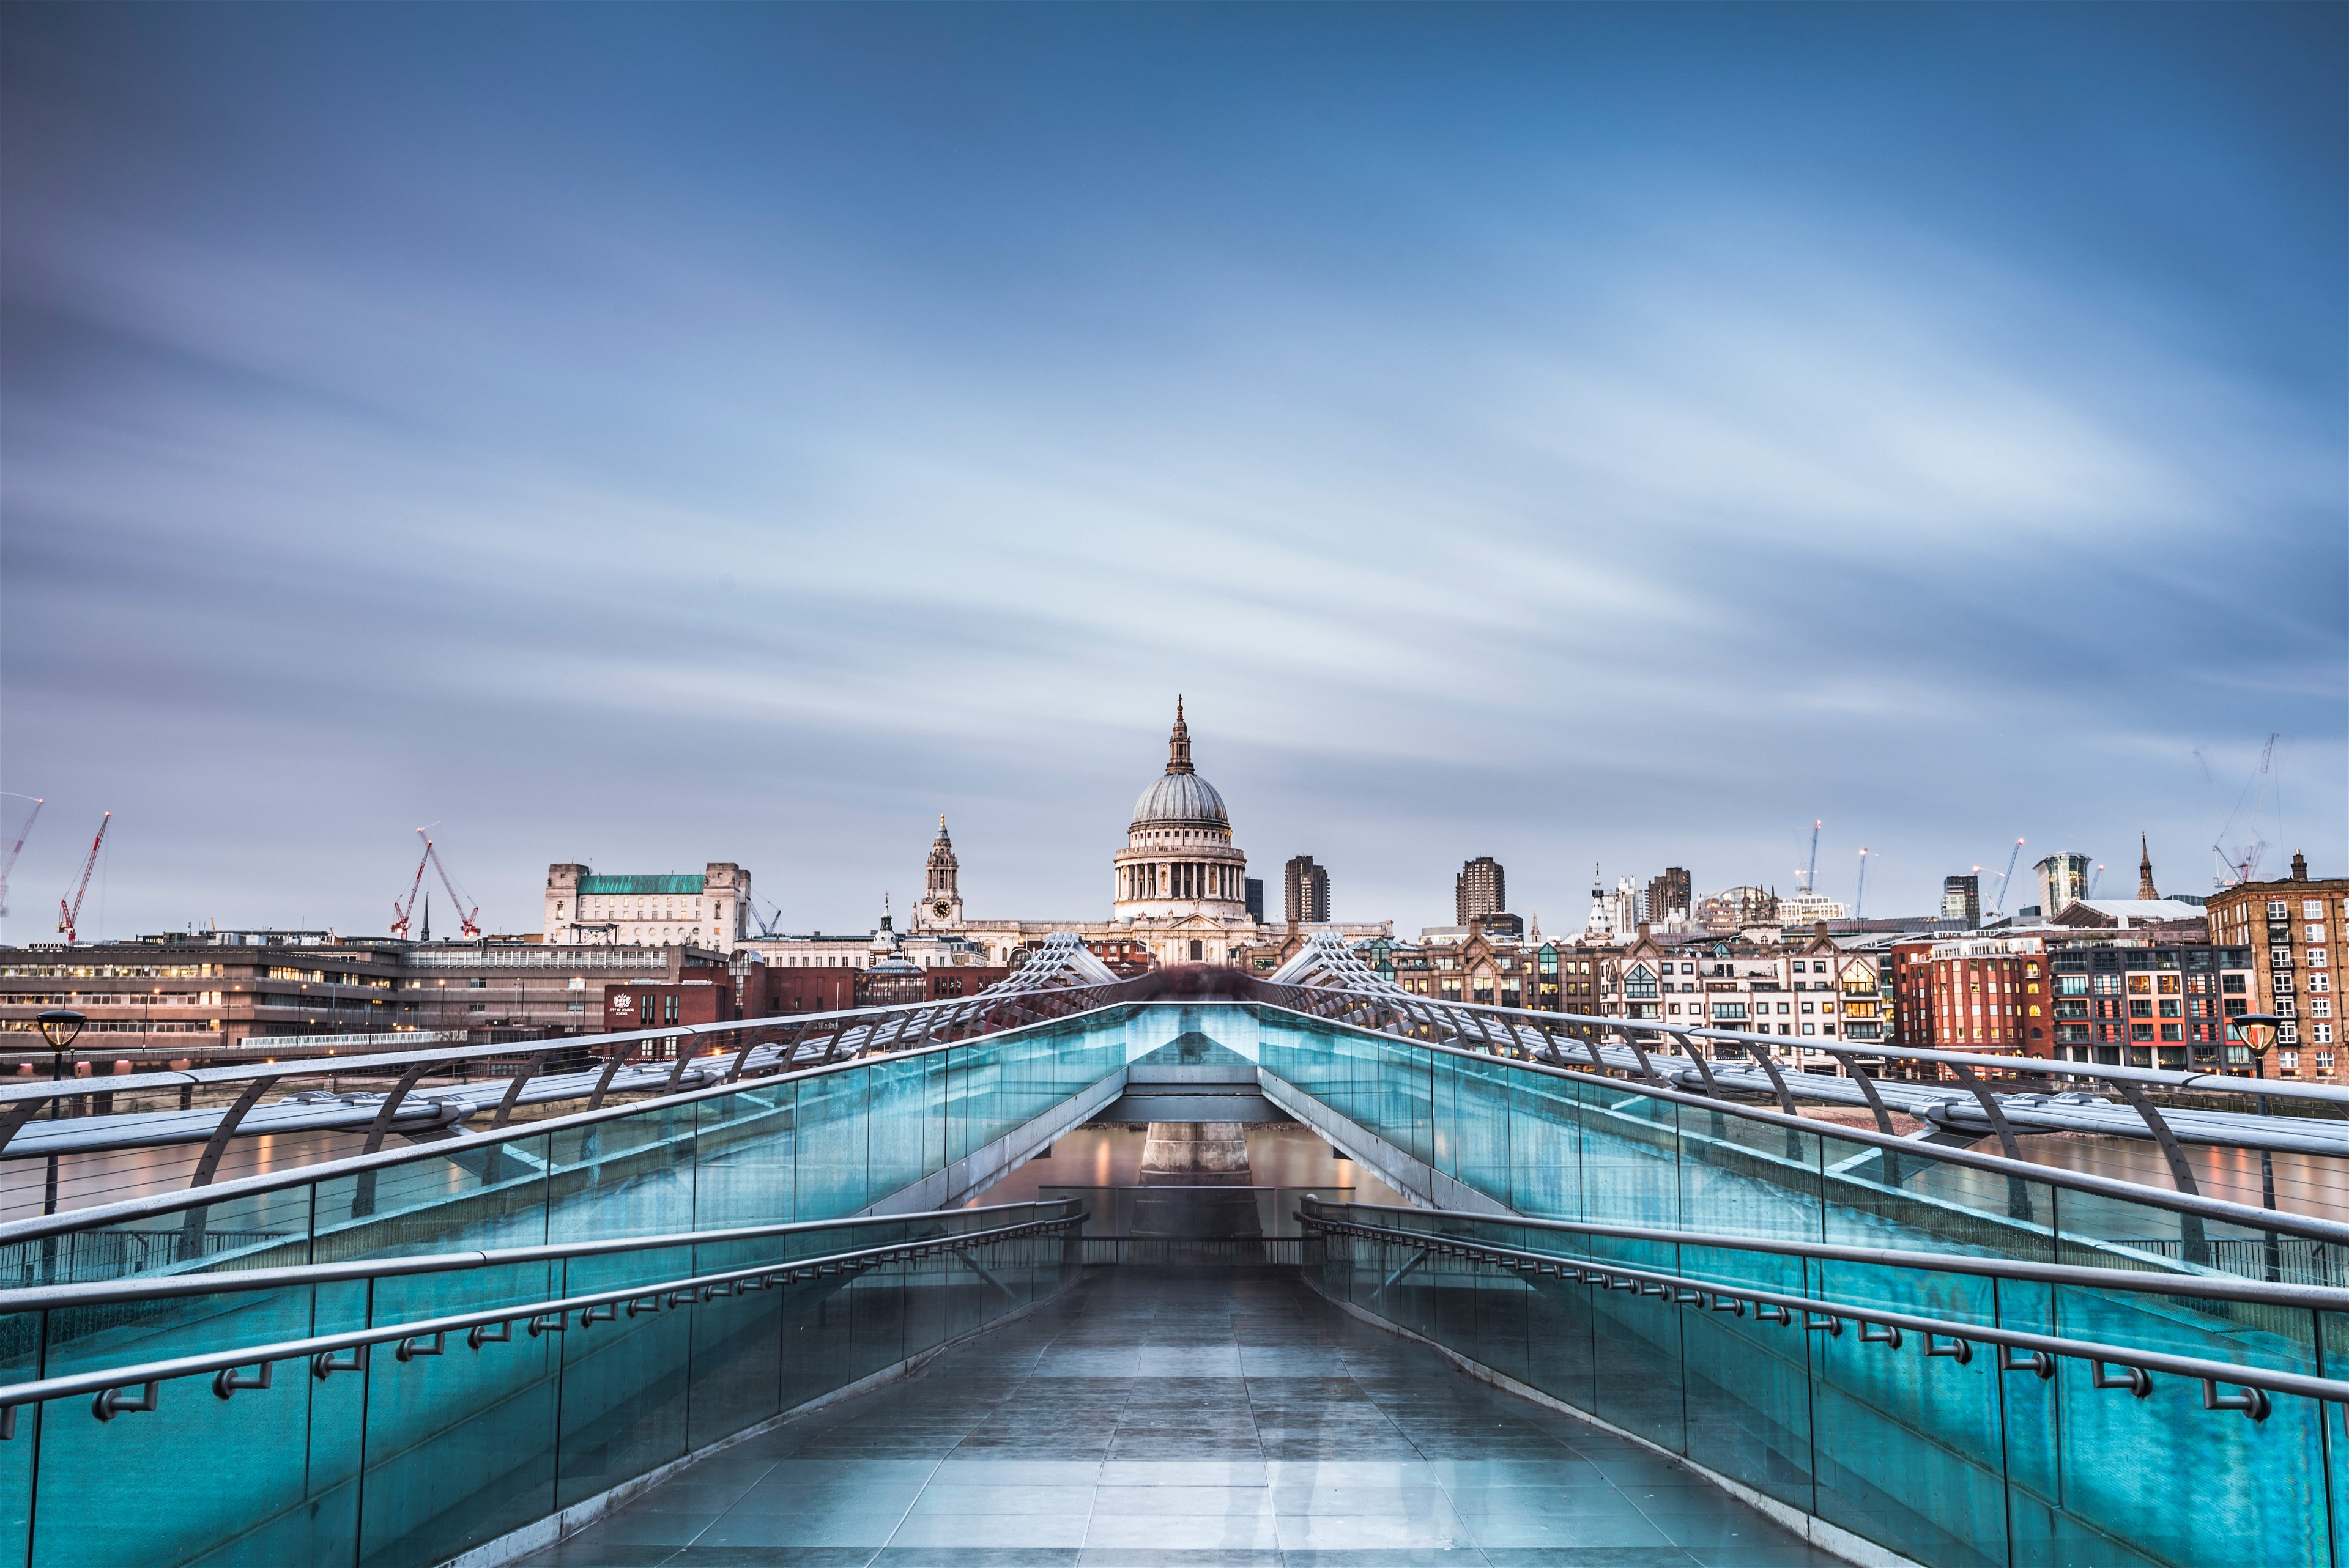 SHUTTER SPEED CREATIVITY: TOWER BRIDGE, LONDON